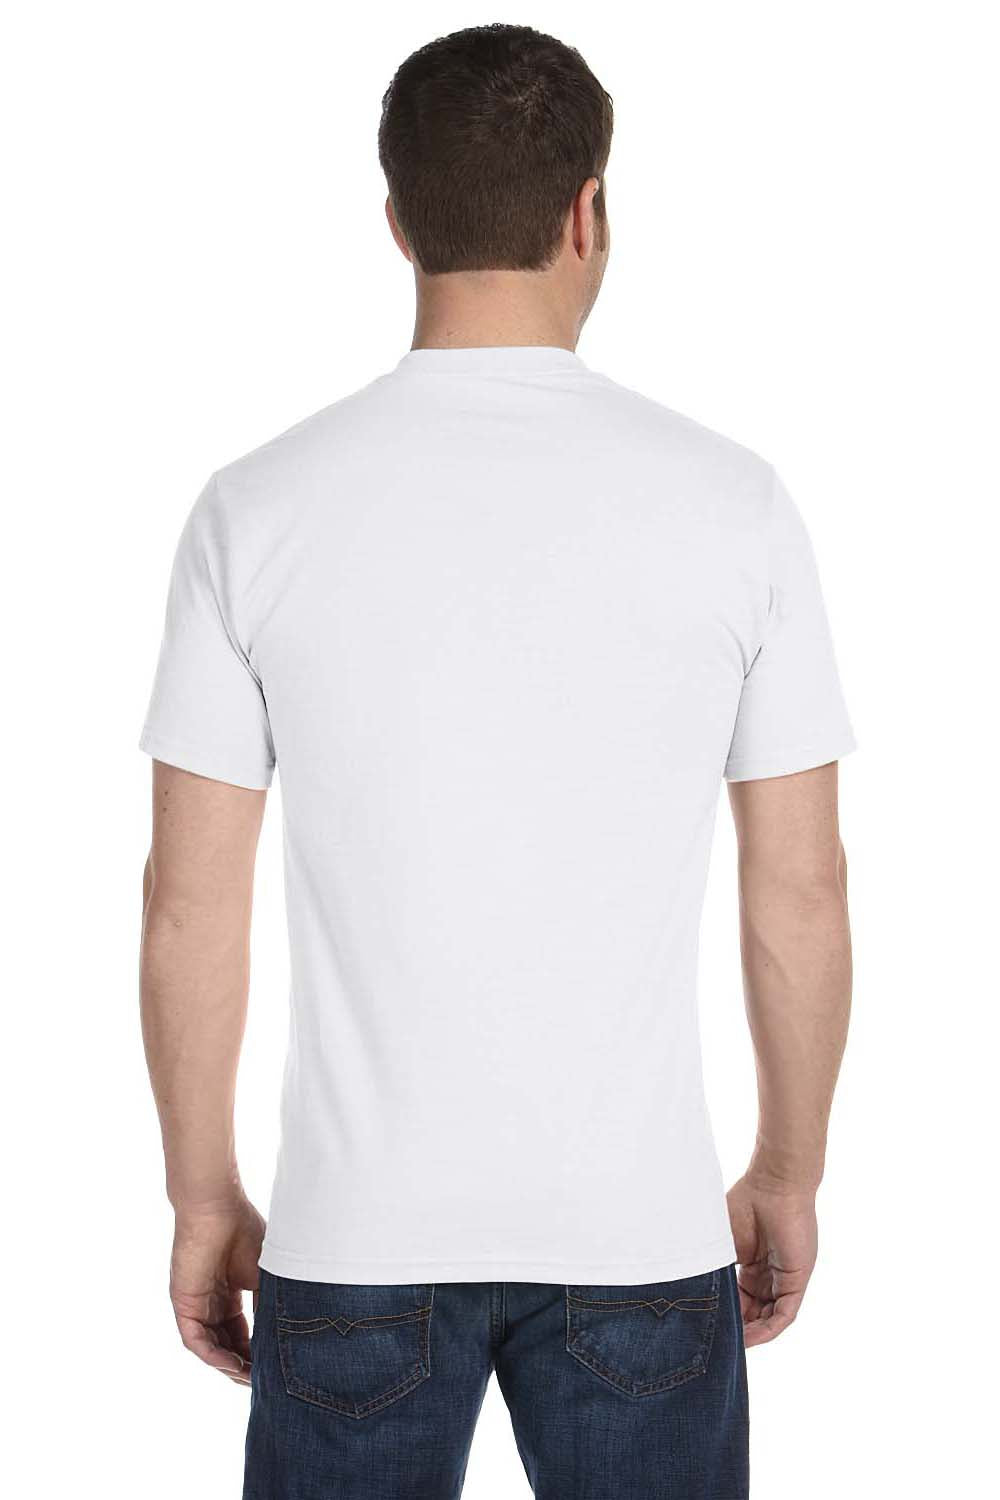 Hanes 5180 Mens Beefy-T Short Sleeve Crewneck T-Shirt White Back